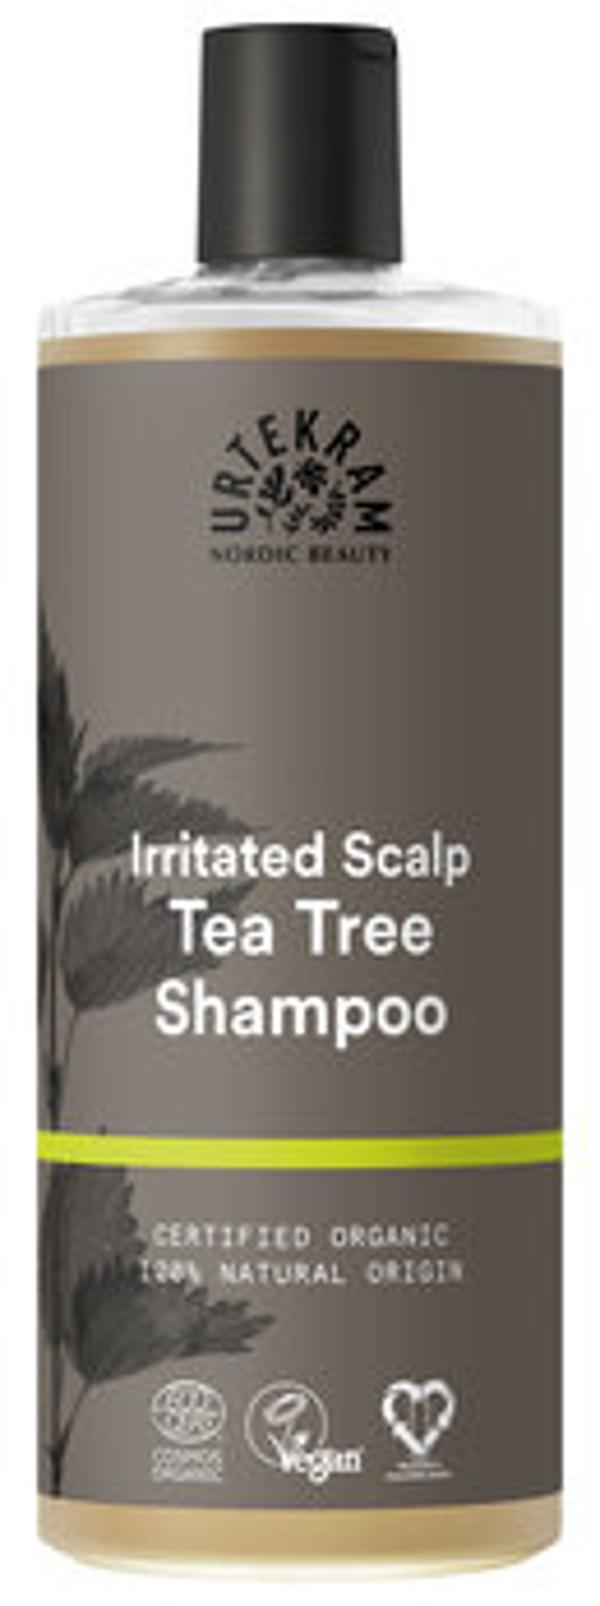 Produktfoto zu Teebaum Shampoo 500ml